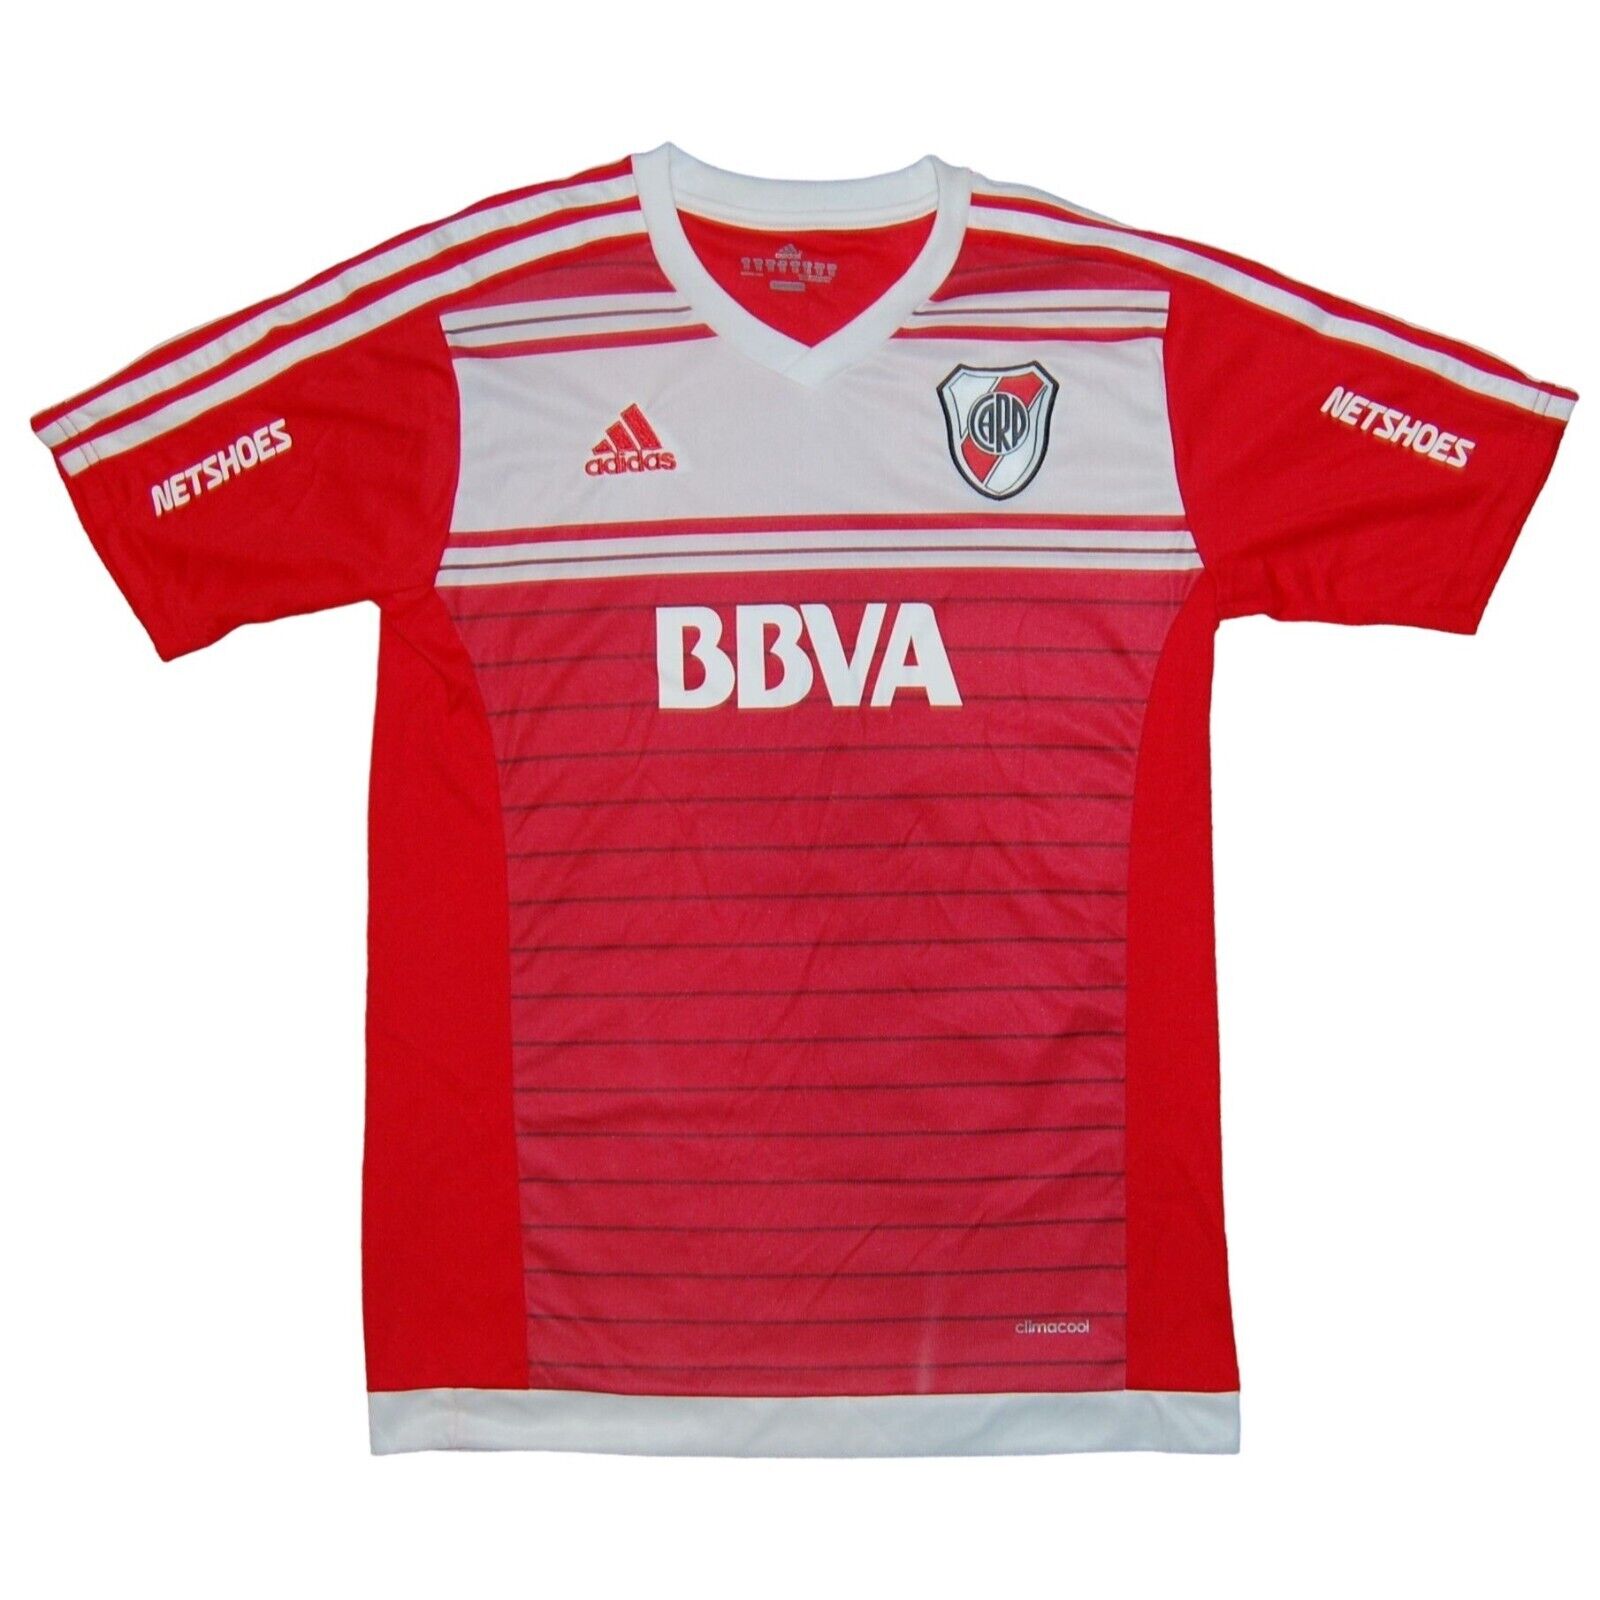 tira Clavijas Persona enferma River Plate CARP Argentina Mora #7 Adidas Soccer Jersey Kit Youth Size 16 |  eBay